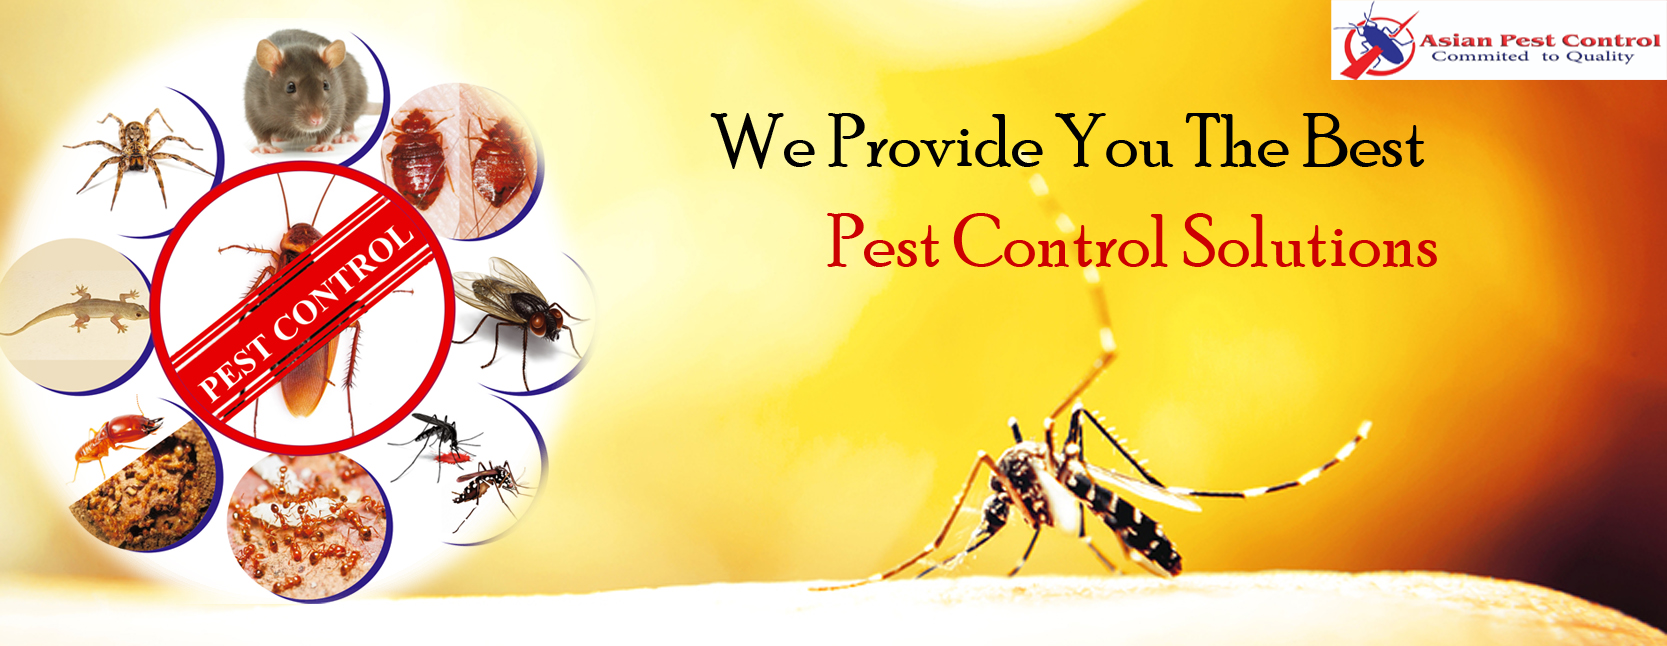 # No.1 Pest Control – Discount Up to 25%